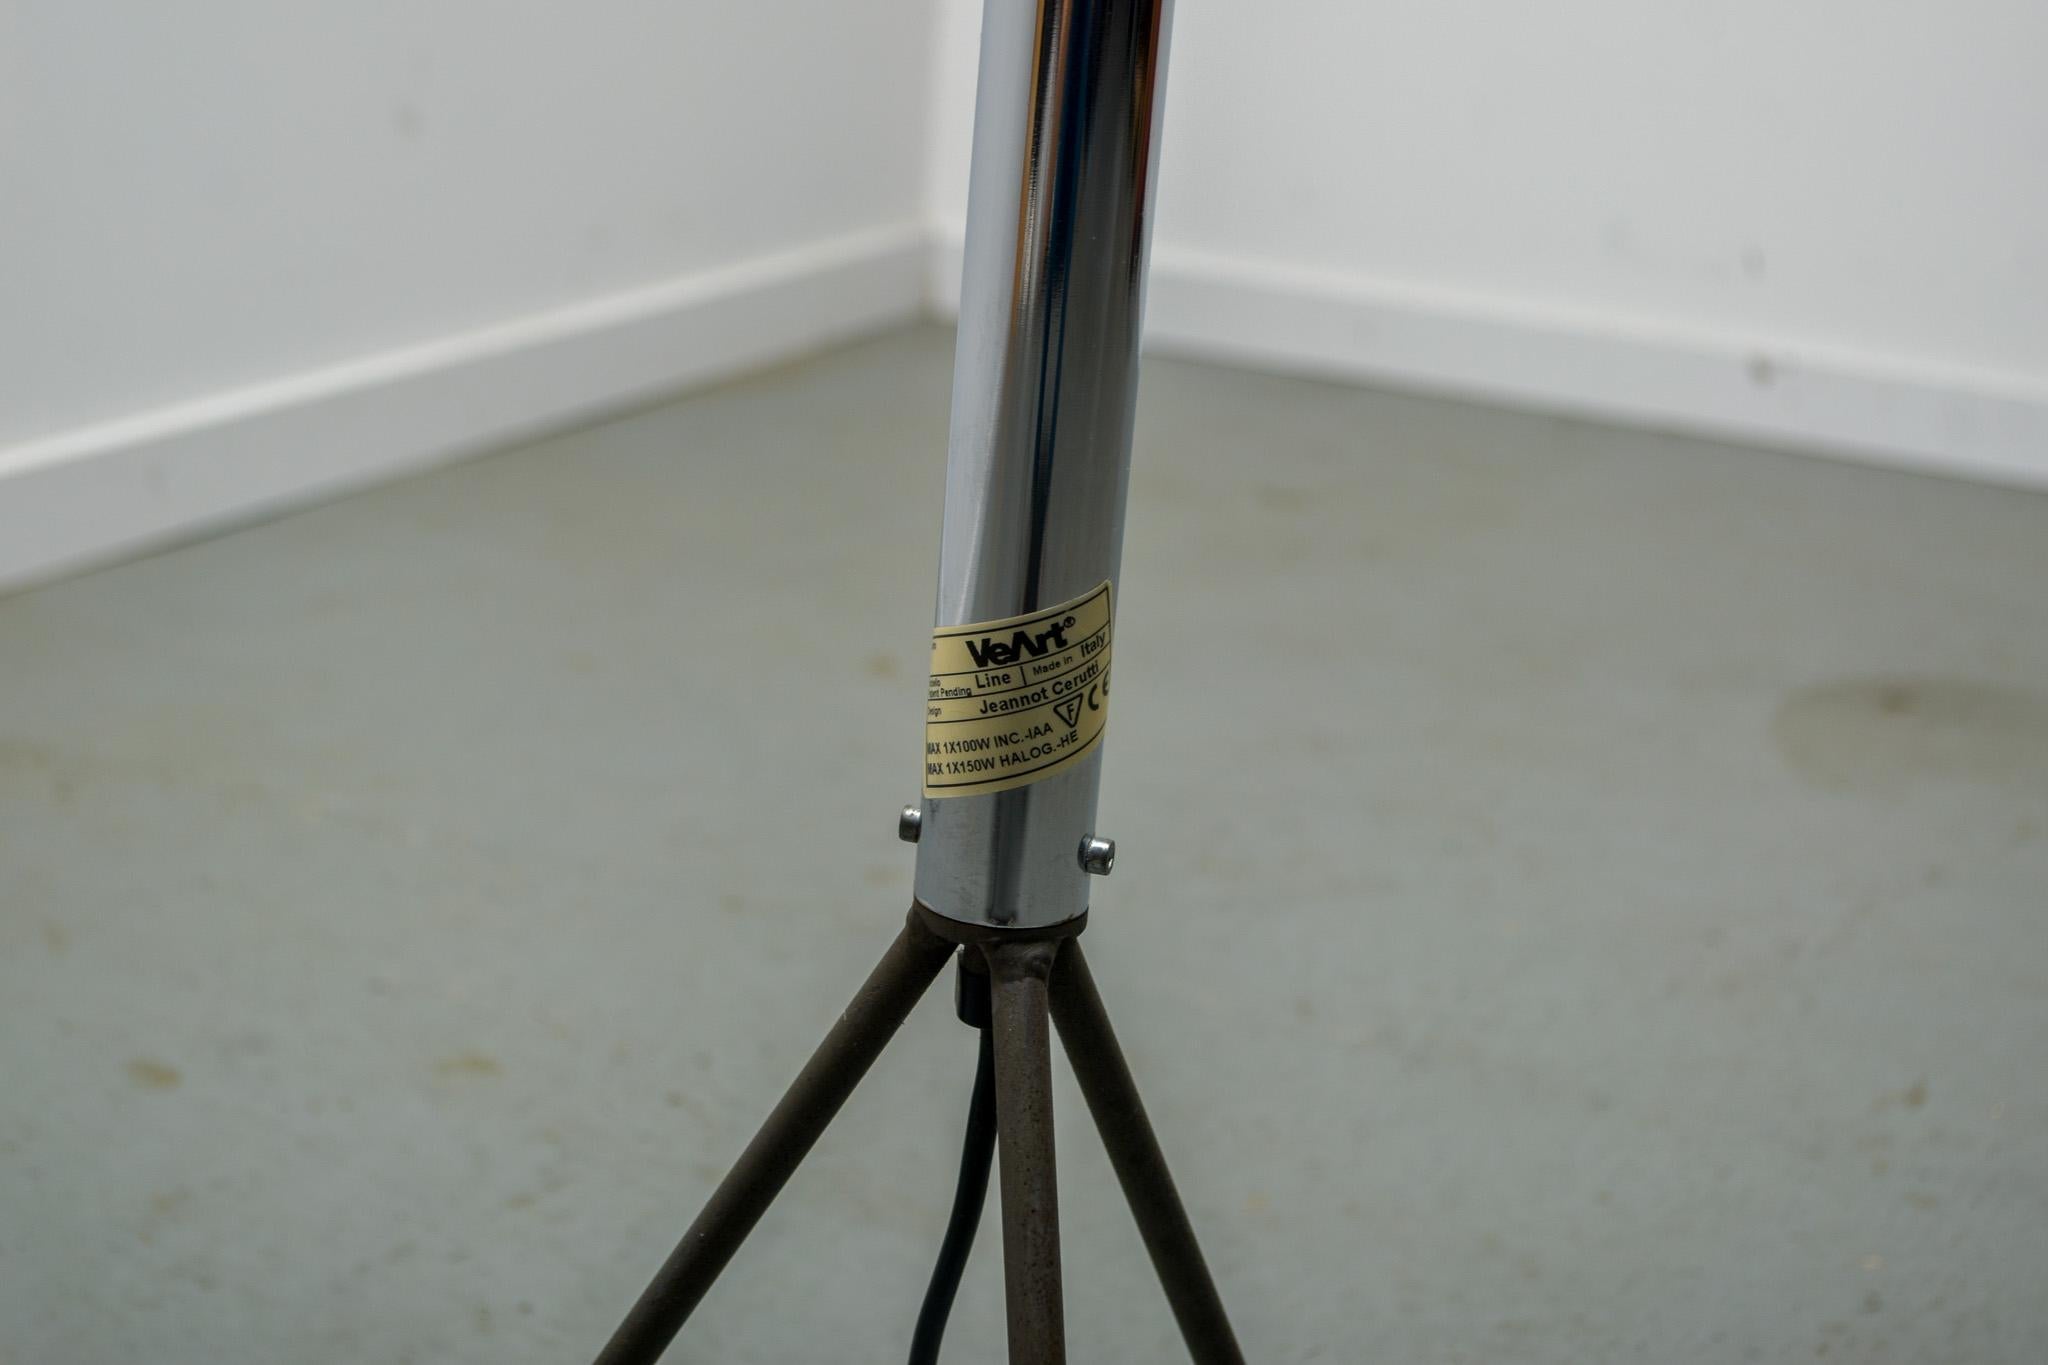 Metal Post modern murano glass floor lamp by Veart